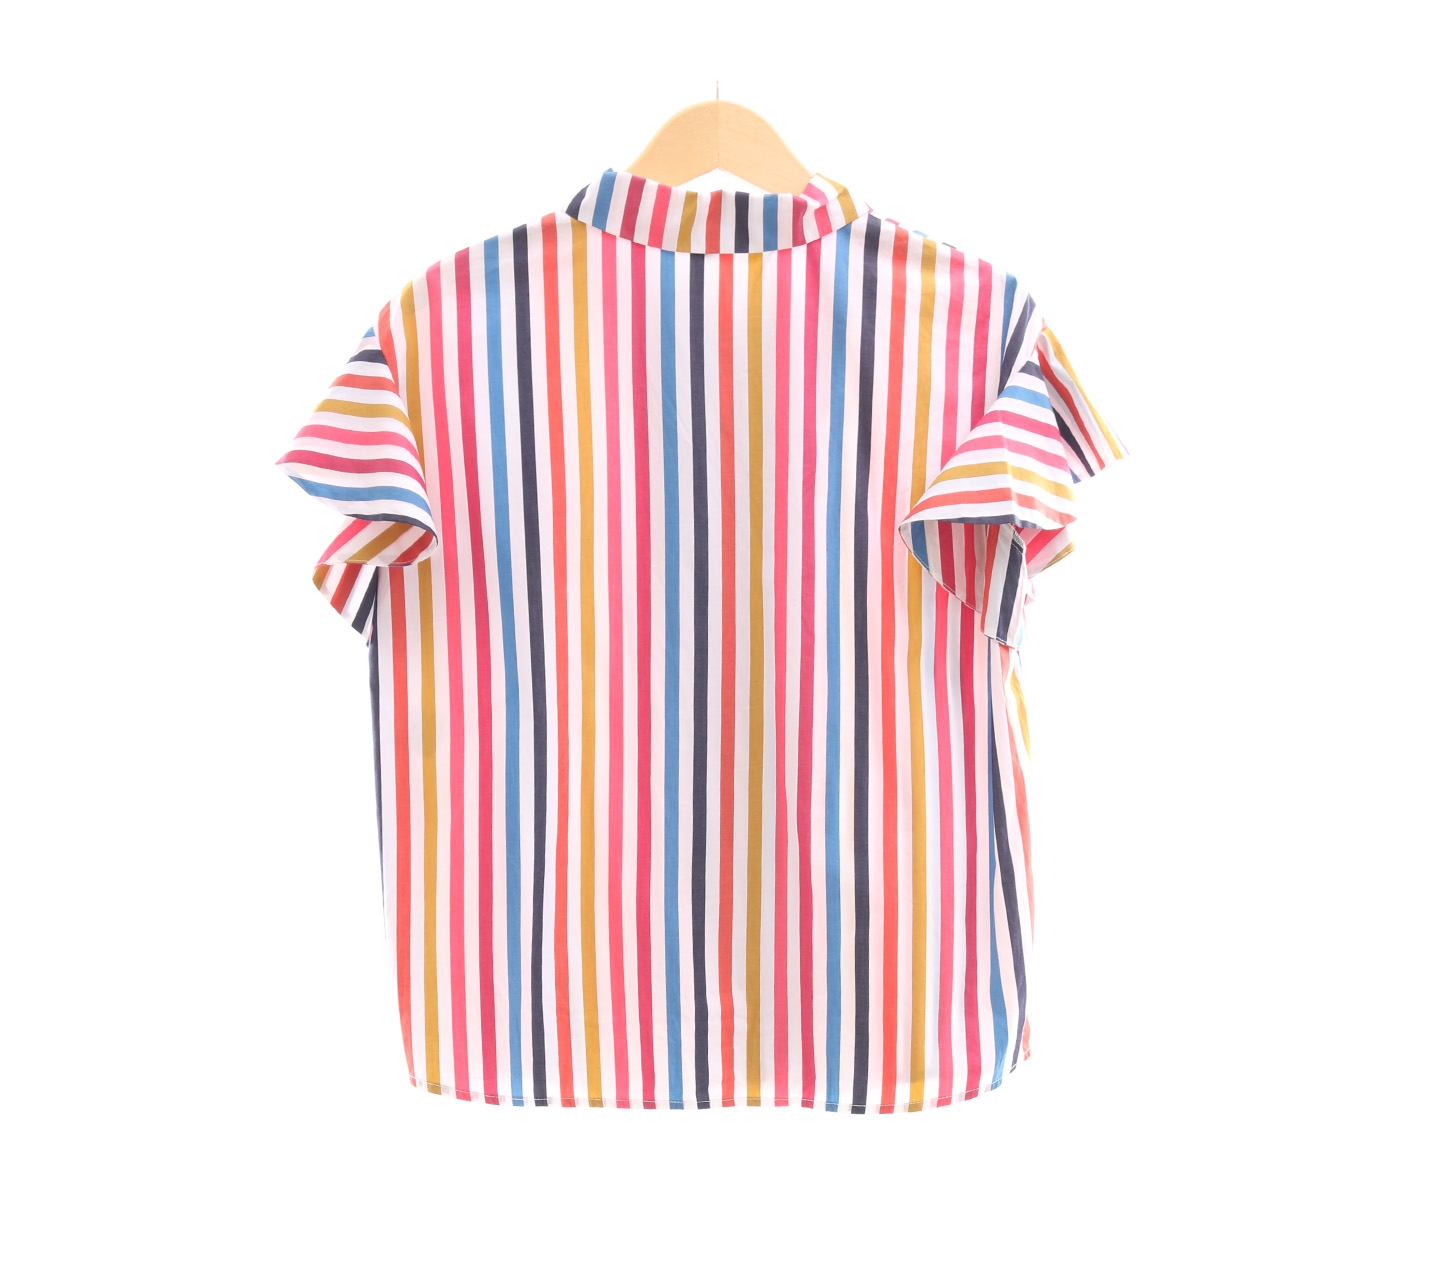 Tara Jarmon Multicolor Striped Shirt